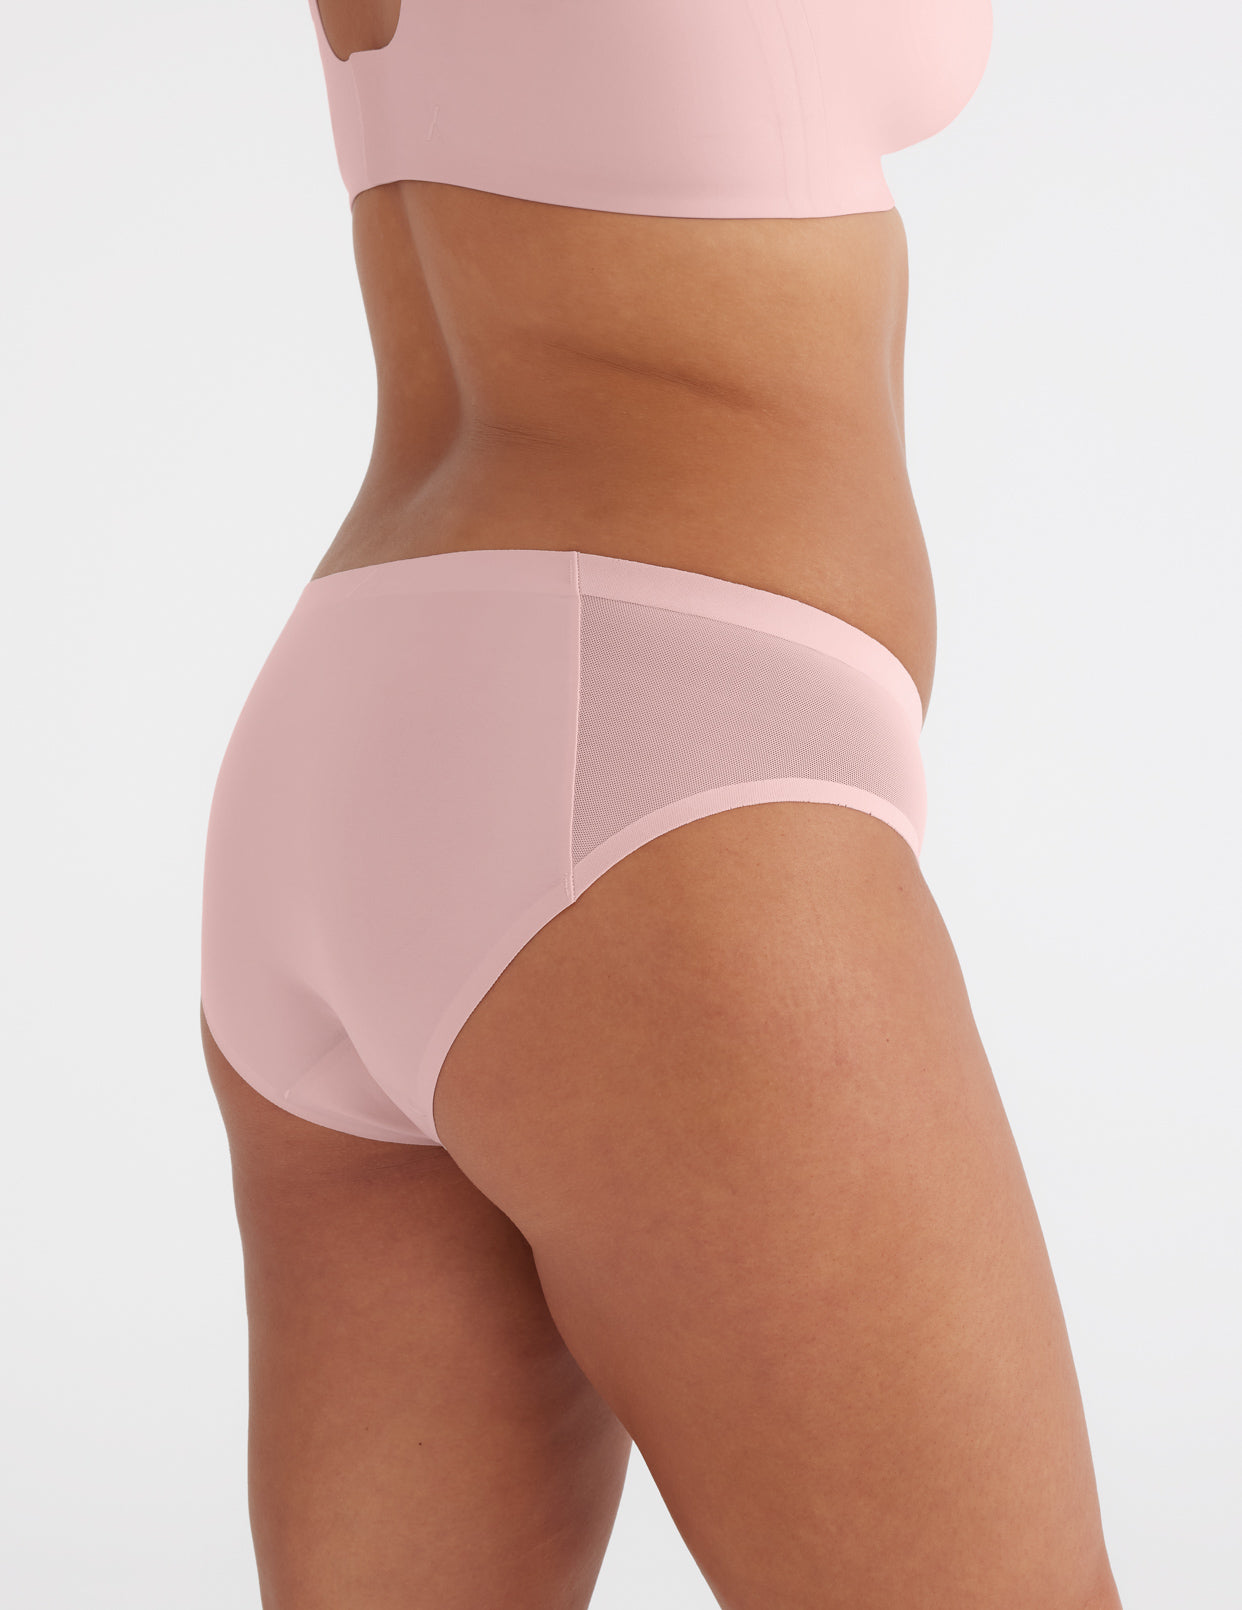 1 x RAW Customer Returns SHARICCA period underwear thongs